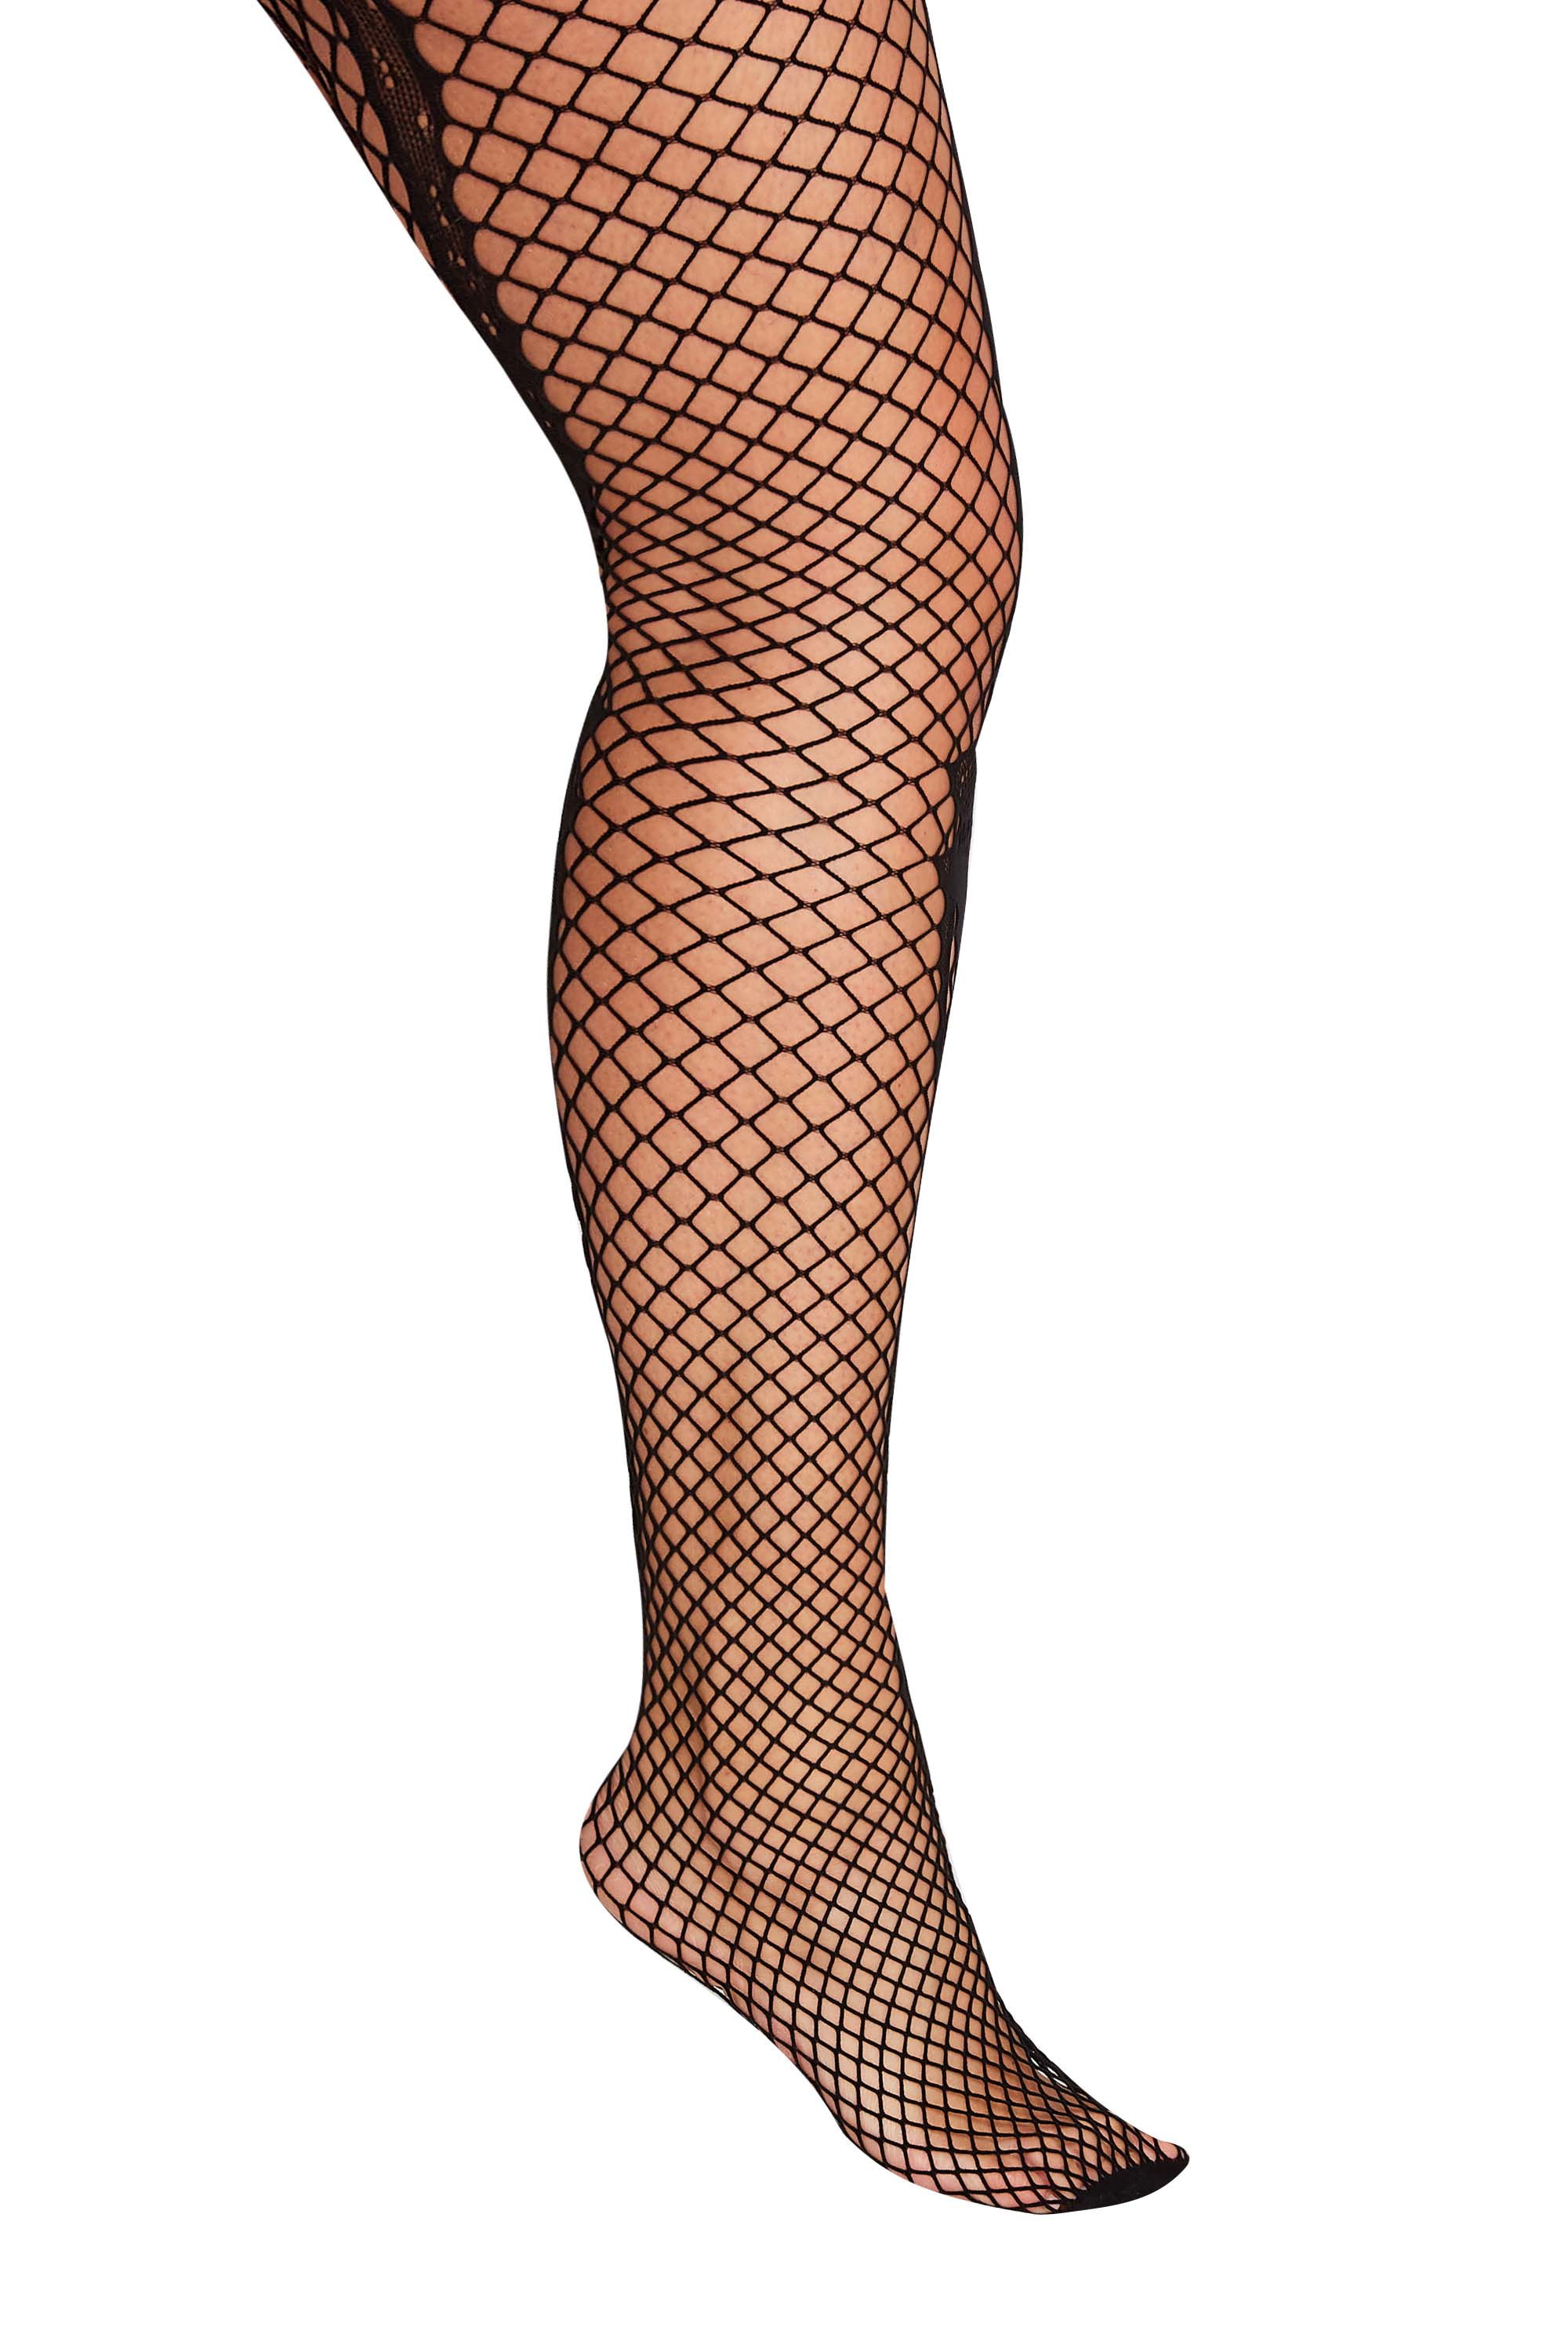 Black Fishnet Stockings Large Diamond Net Sexy Tights For Women